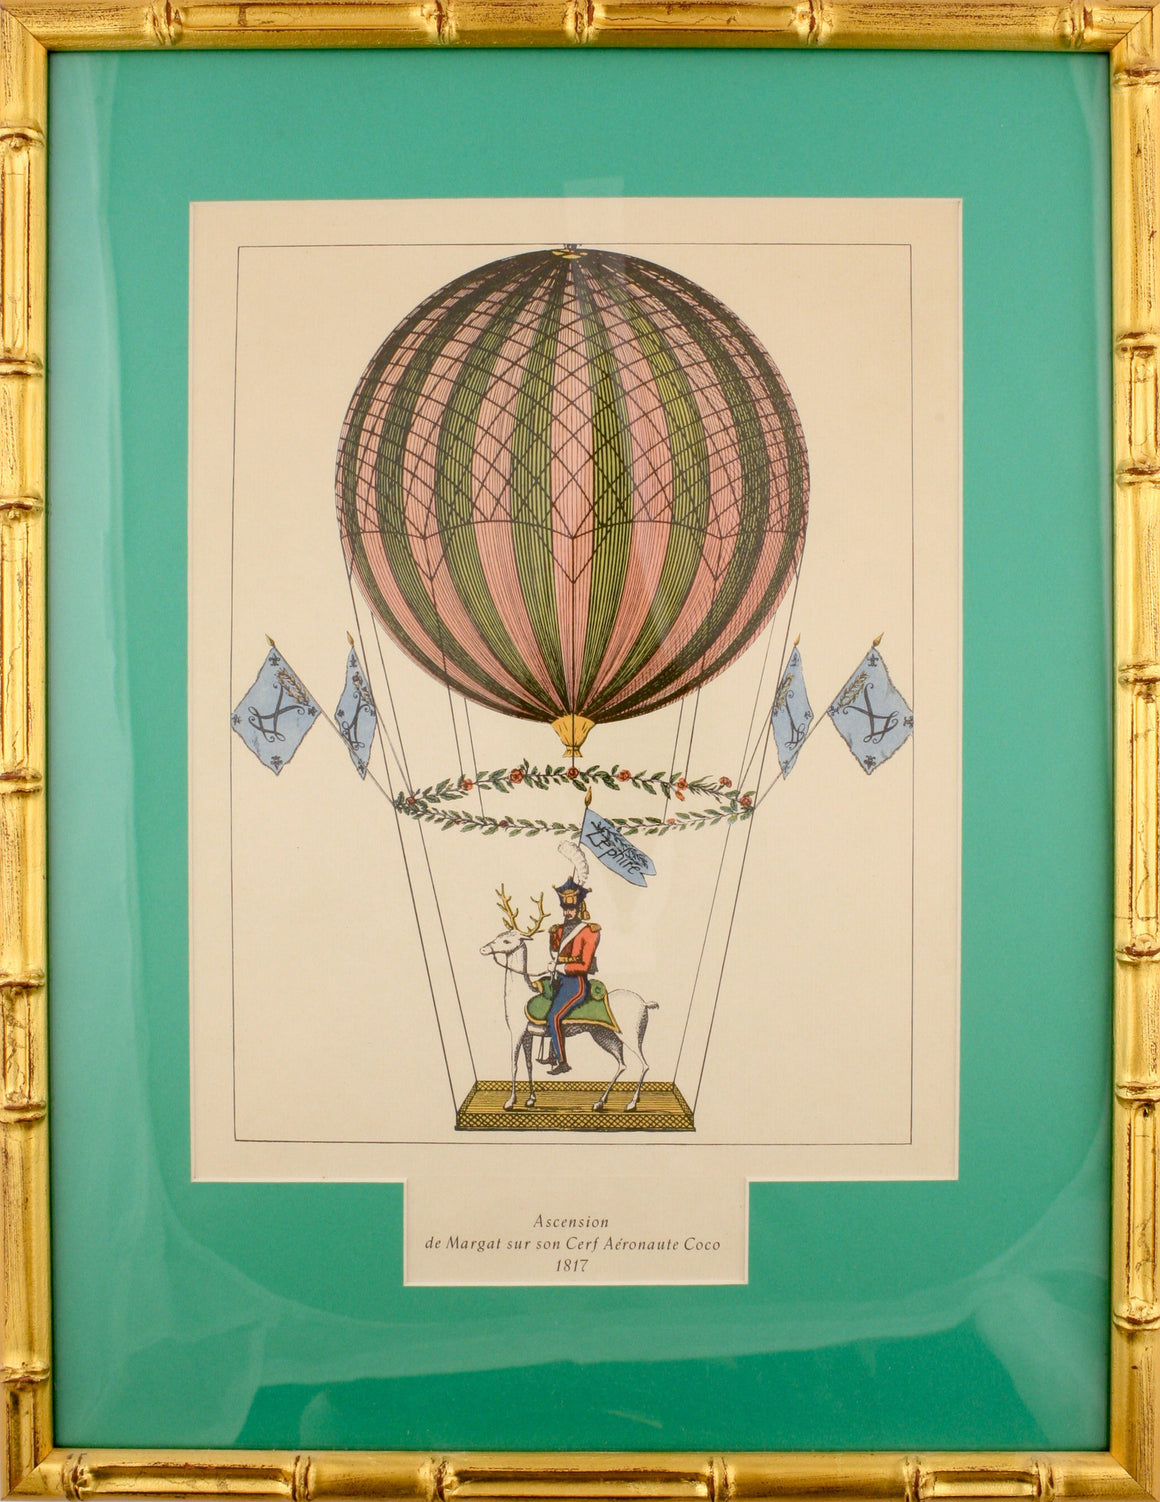 "Ascension De Margat Sur Son Cerf Aeronaute Coco" 1817 (SOLD)